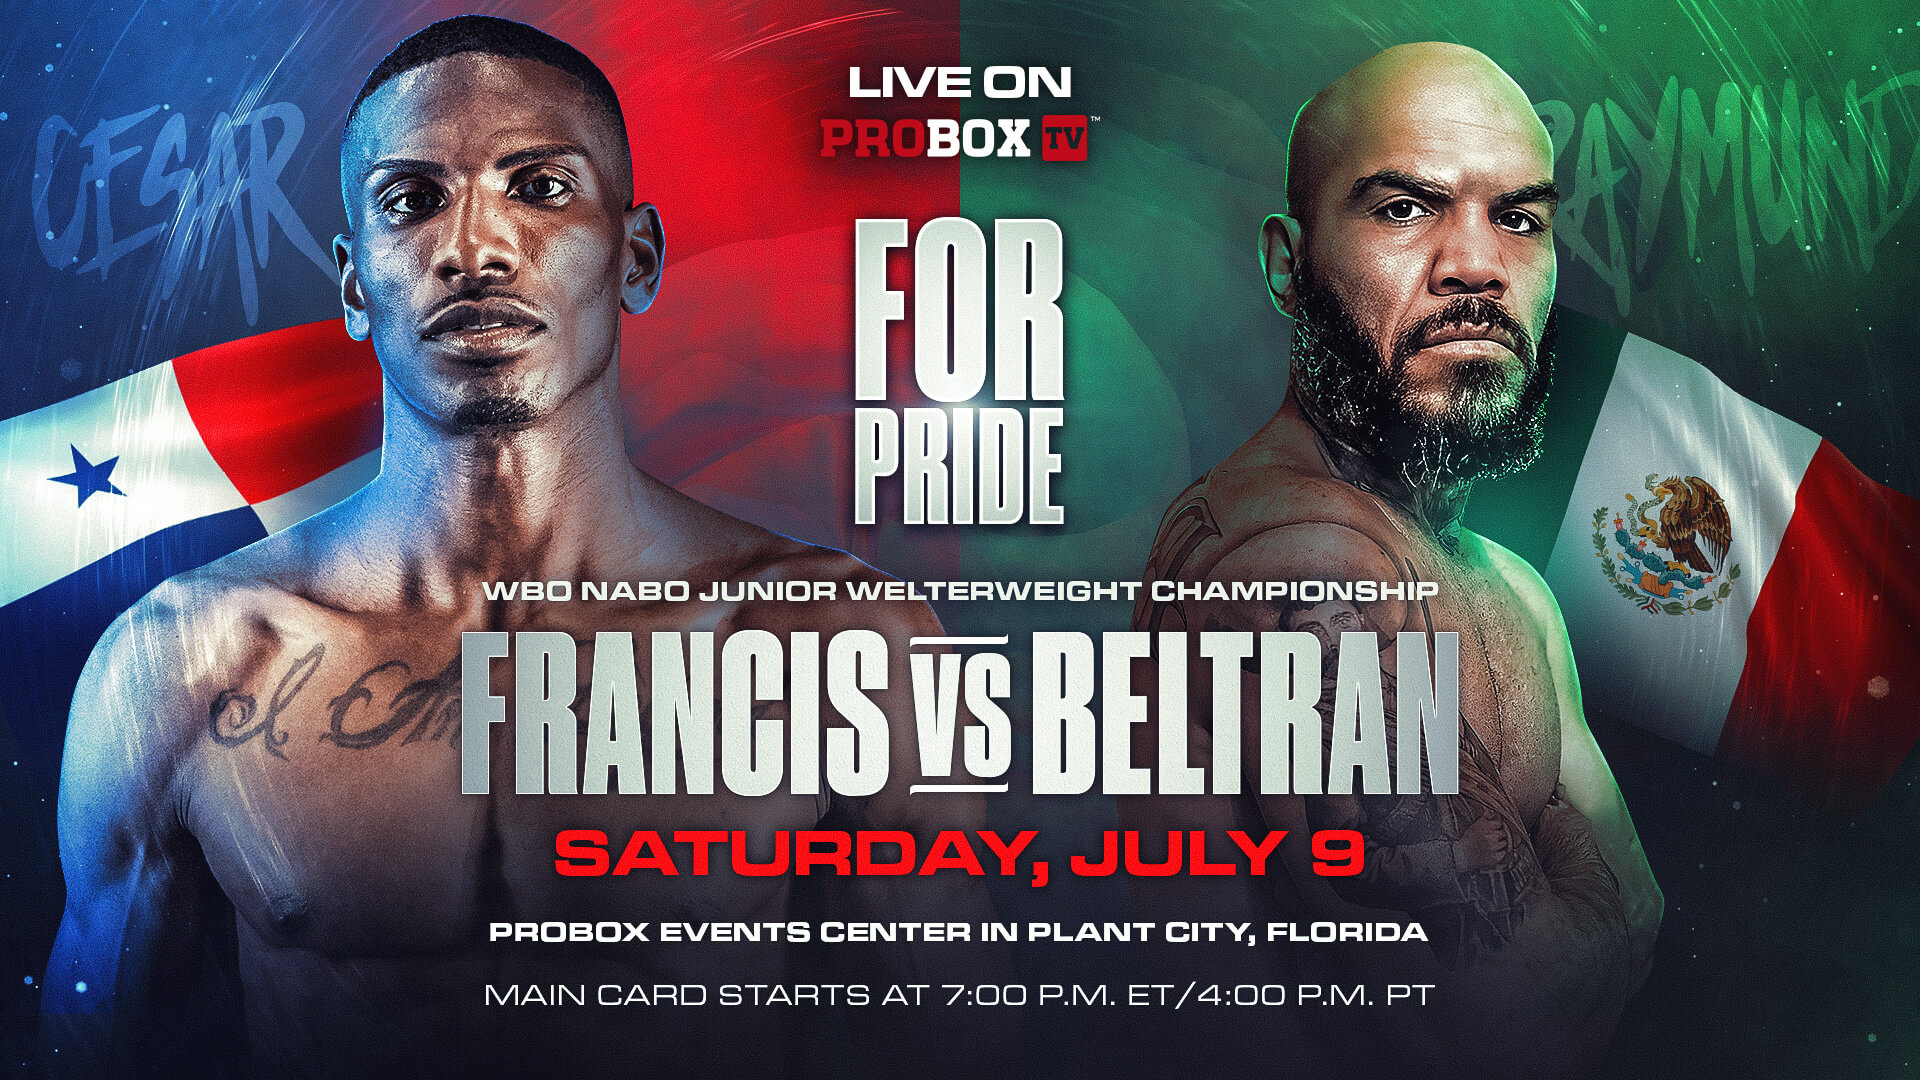 Francis vs Beltran July9th at ProBox Event Center in Plant City, Florida